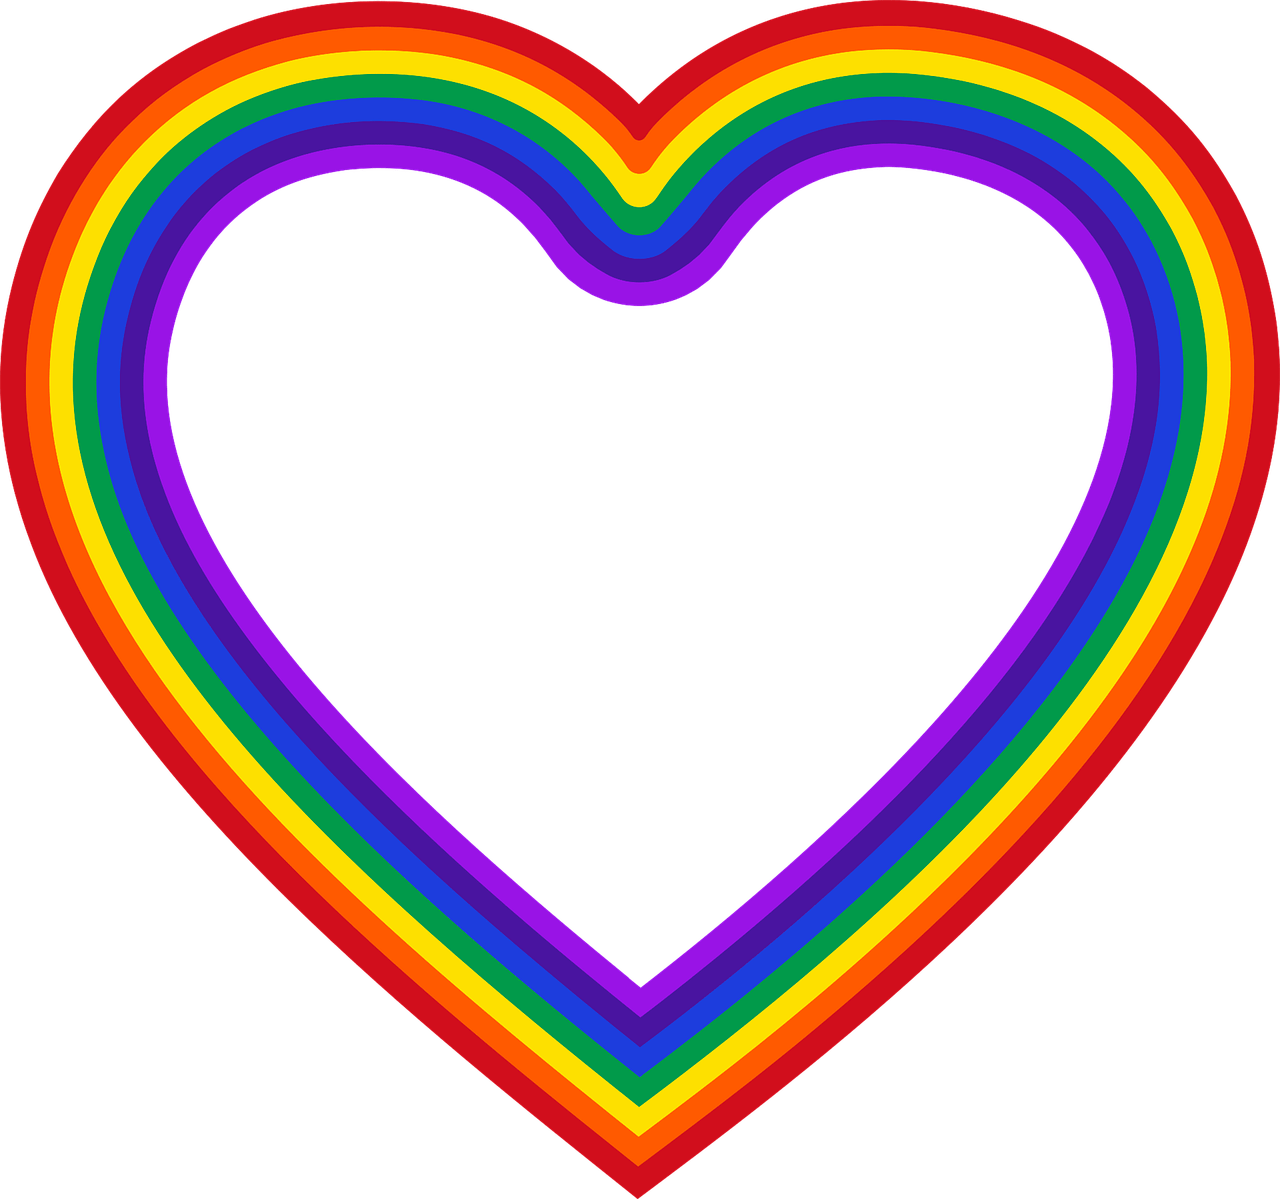 Heart Rainbow Frame Love Harmony  - GDJ / Pixabay